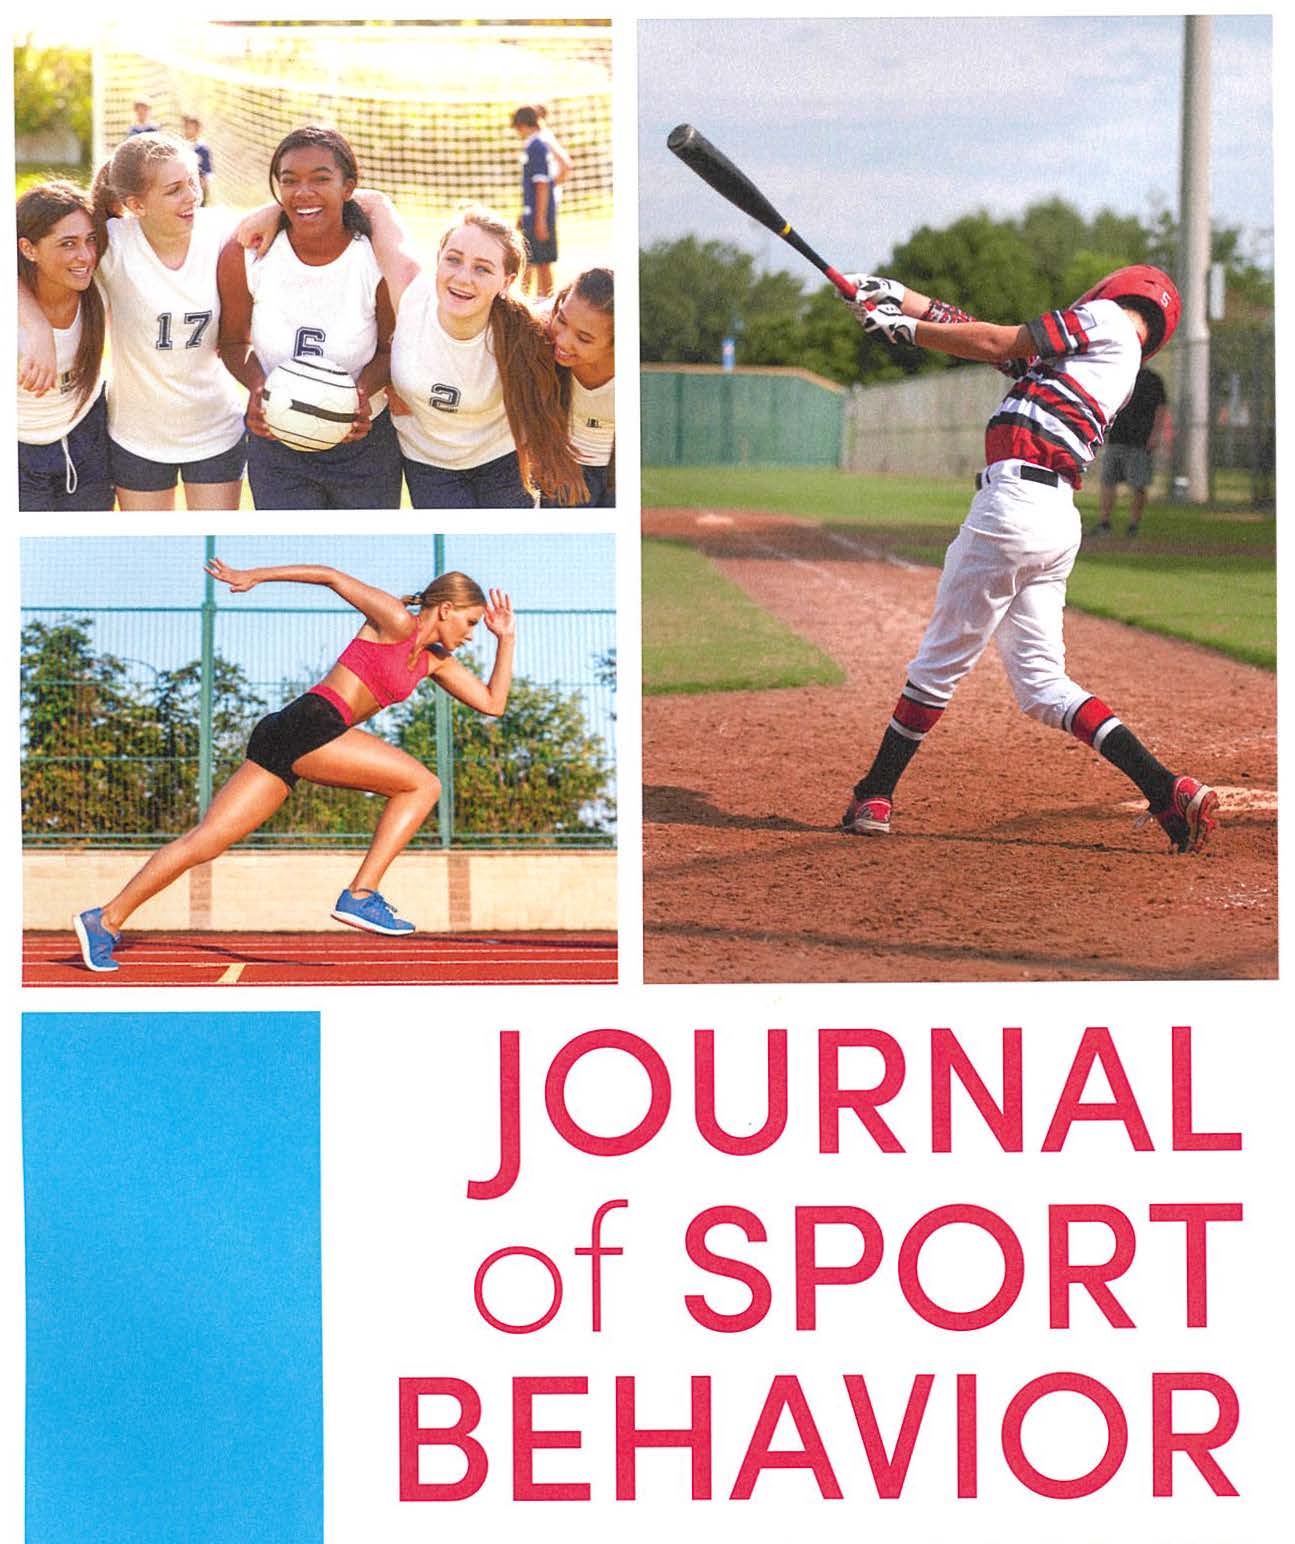 					View Vol. 44 No. 4 (2021): Journal of Sport Behavior 
				